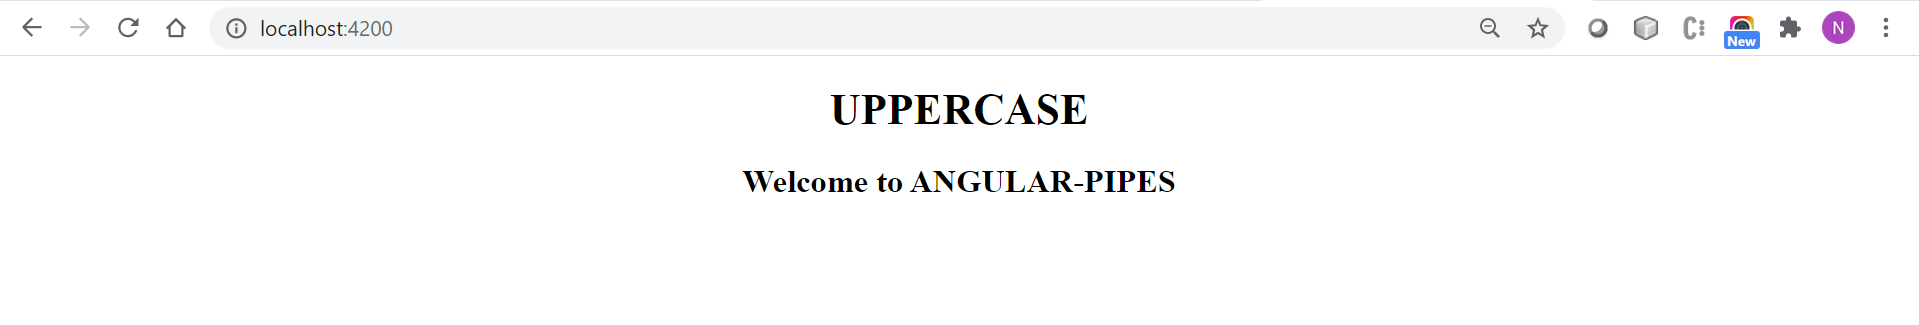 angular uppercase pipe example